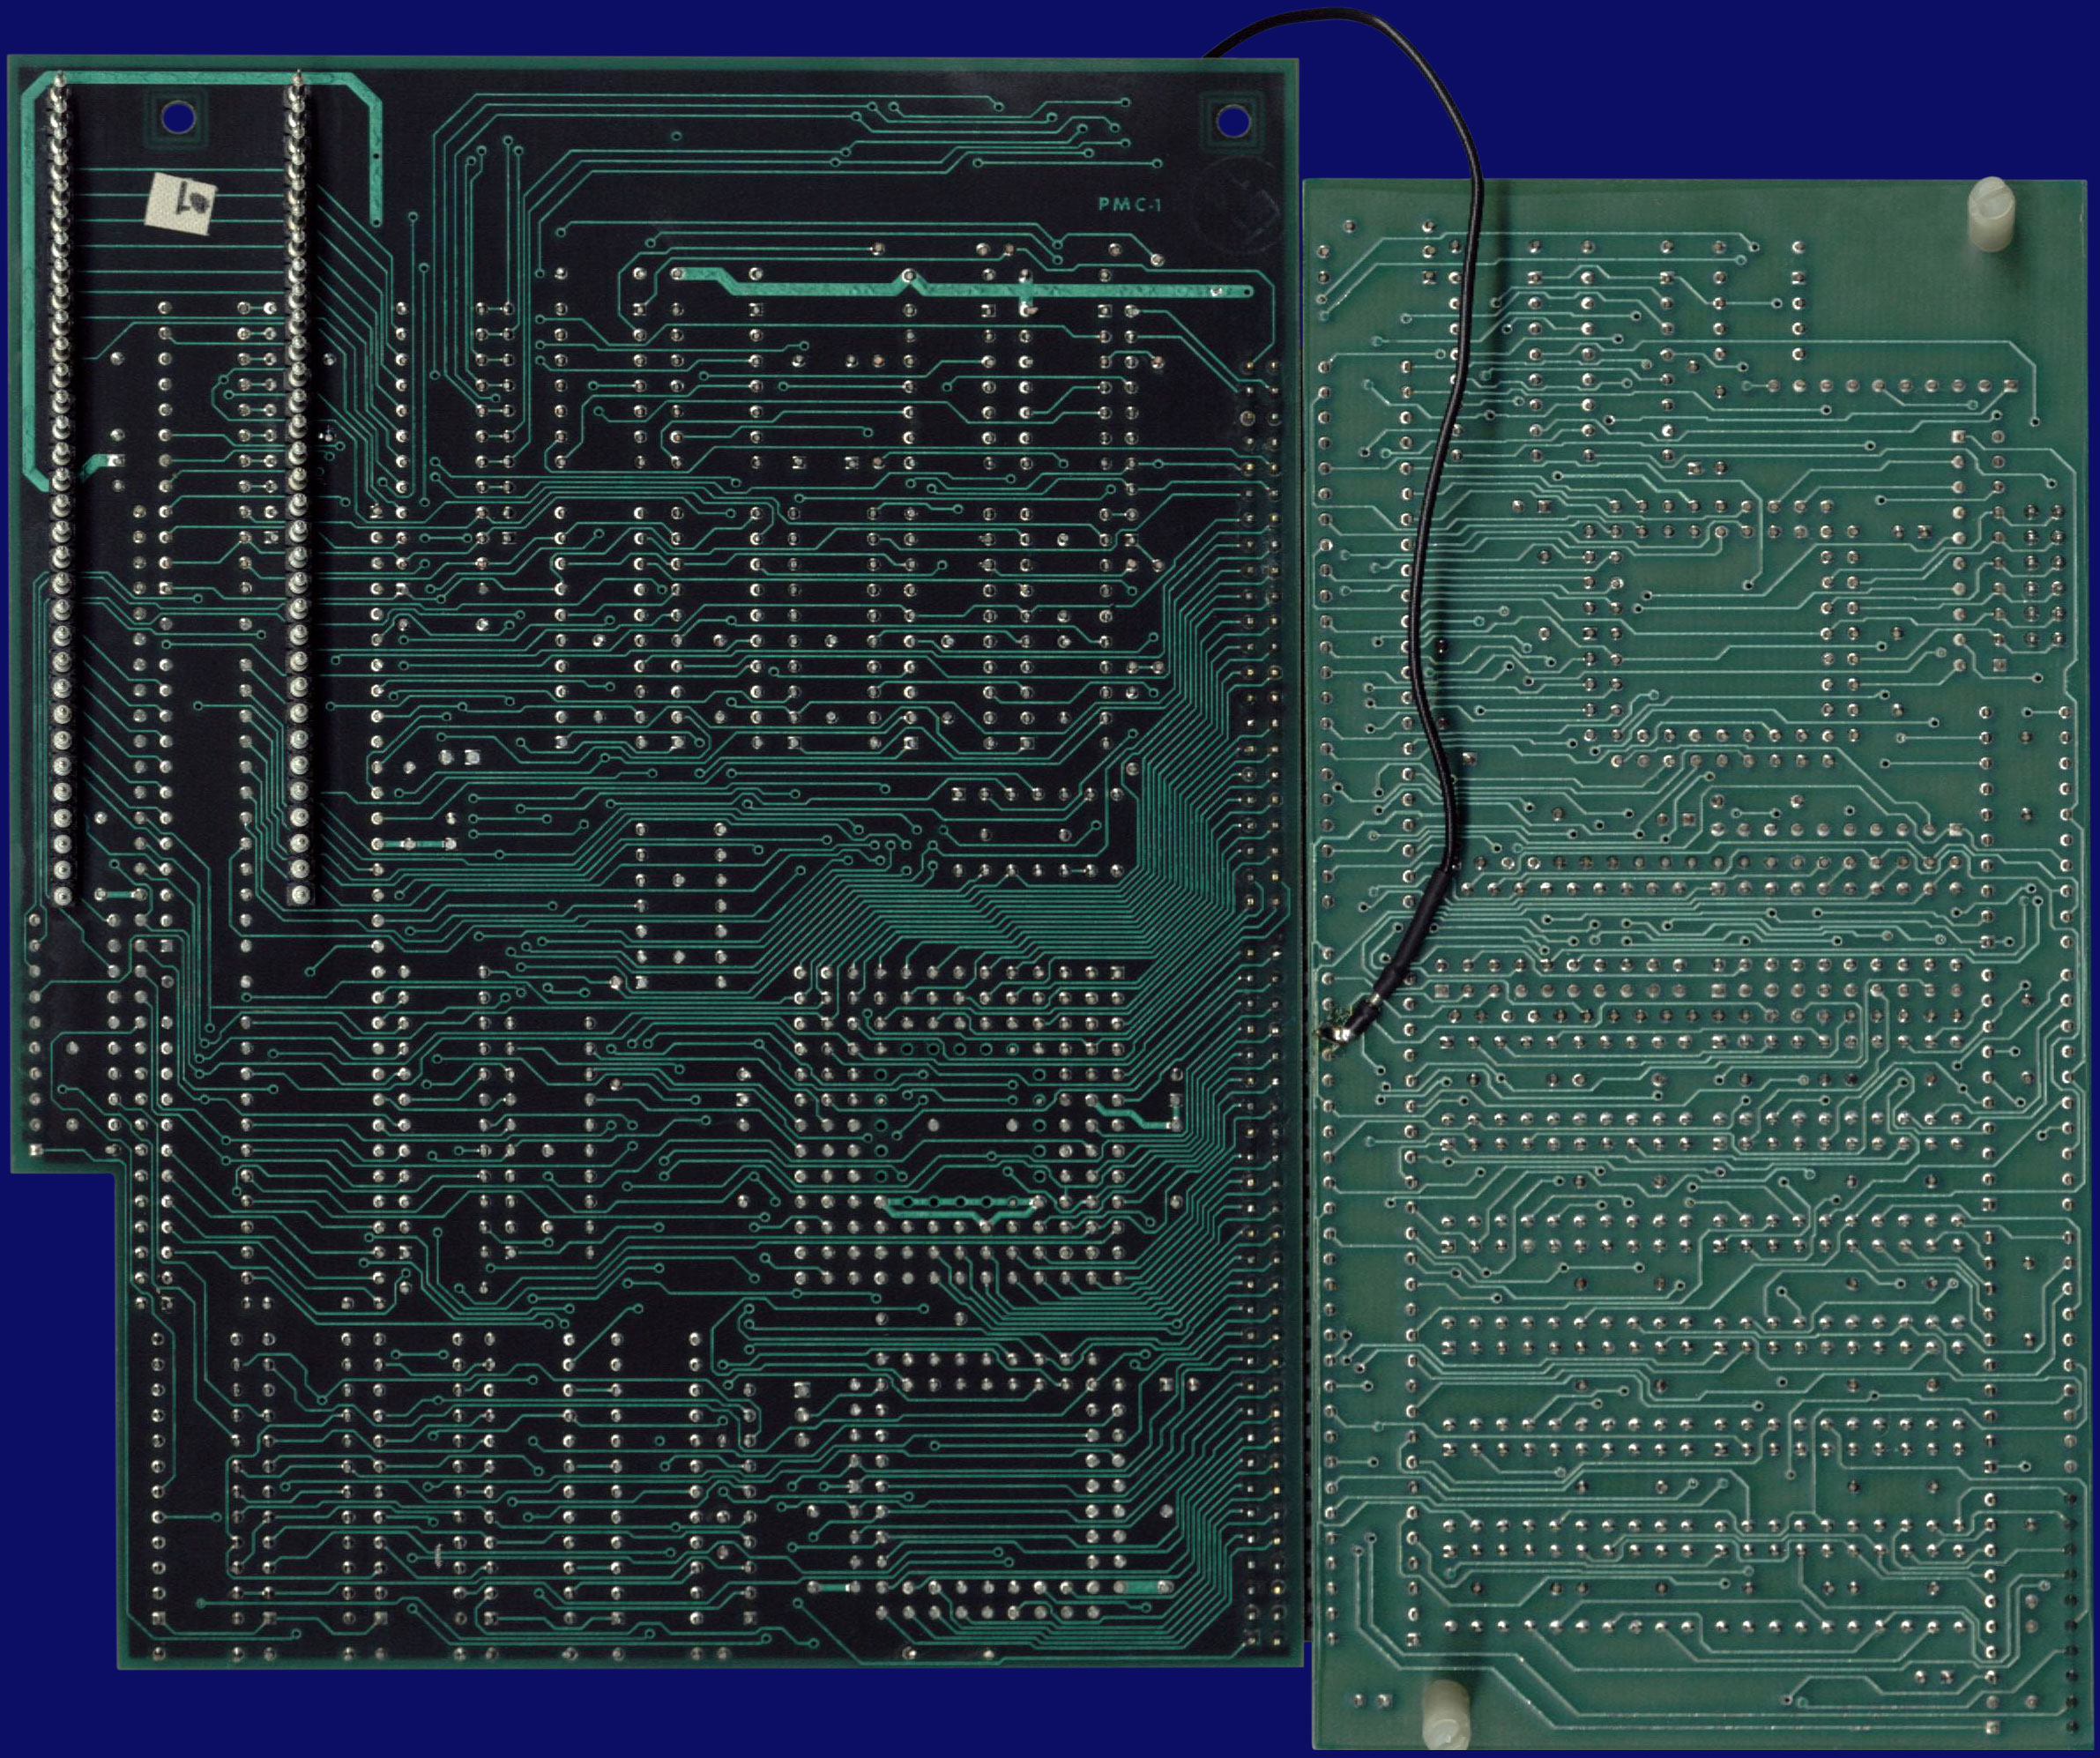 Microbotics VXL*30 - with RAM-32, back side